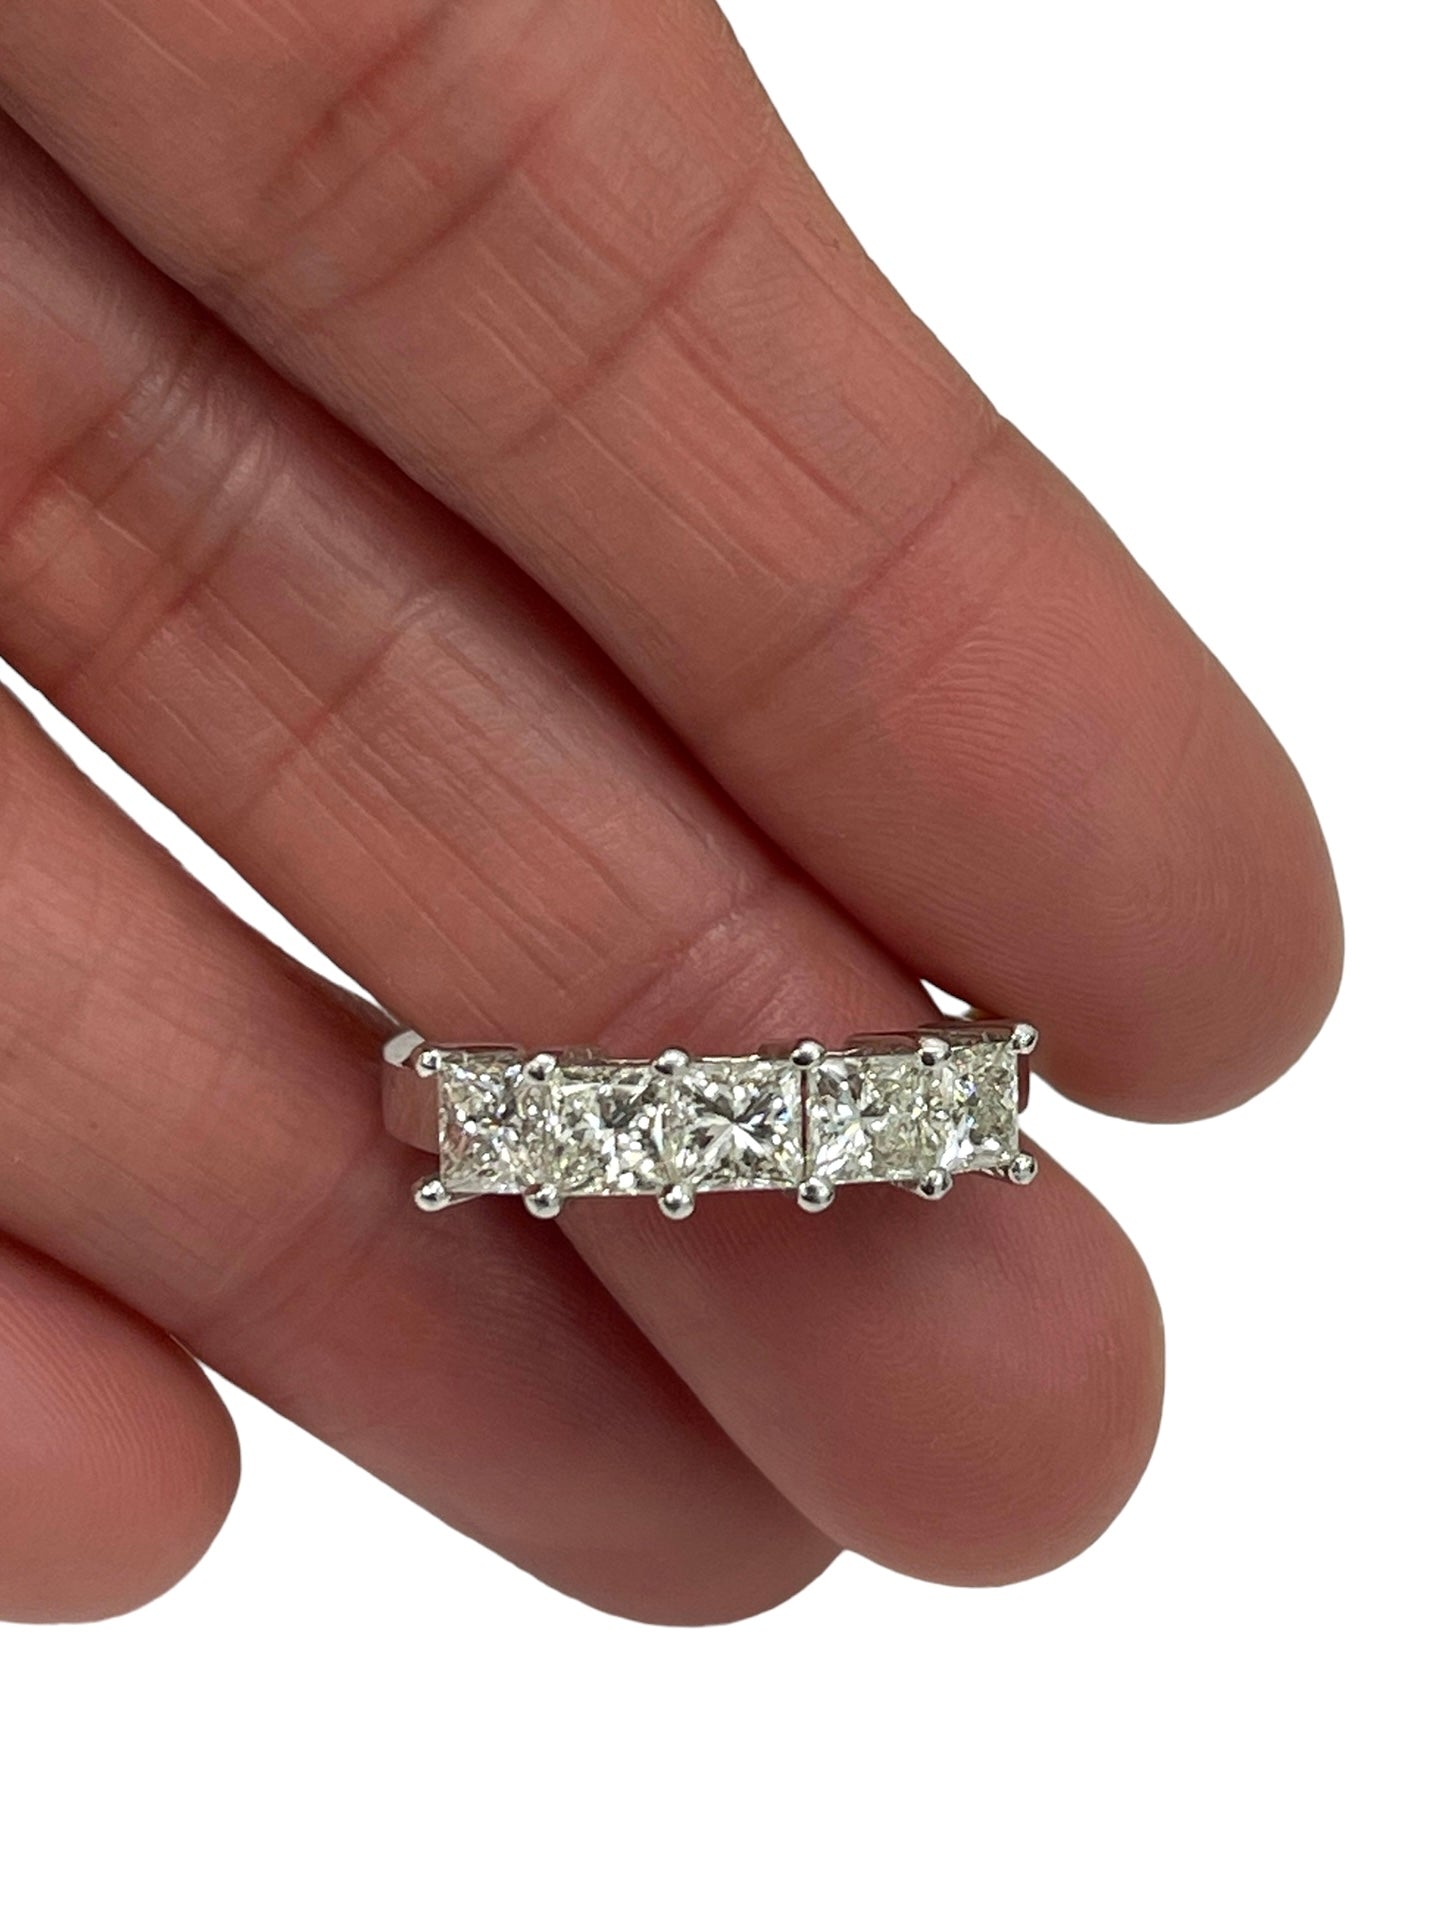 Princess Cut Five Stone Diamond Anniversary Ring White Gold 14kt